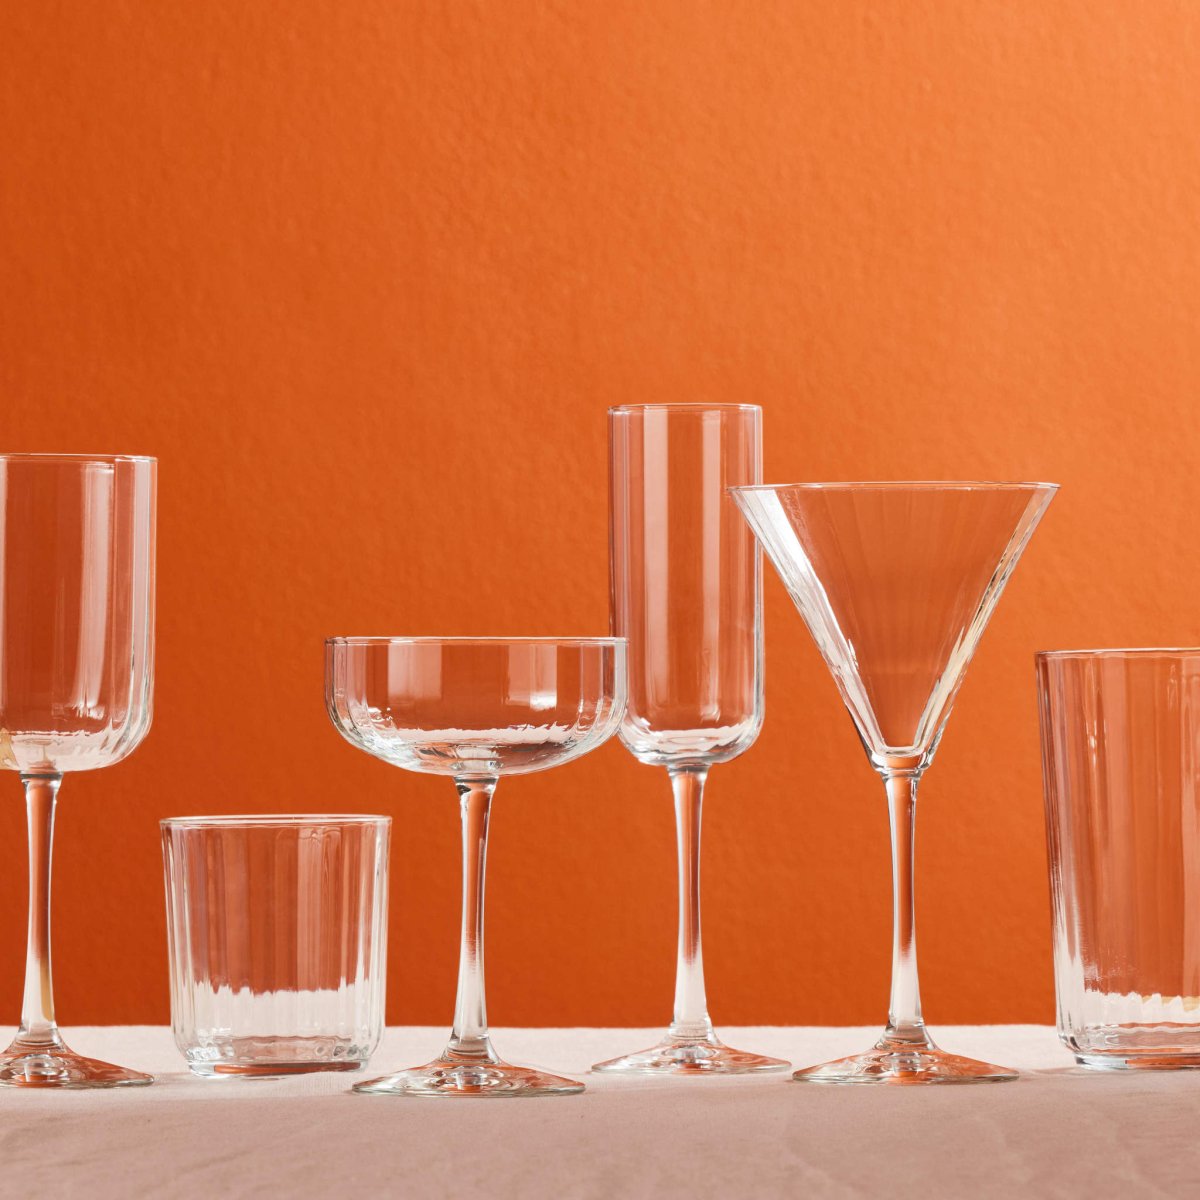 Libbey Paneled Champagne Flute Glasses, 7.5 oz - Set of 4 - lily & onyx